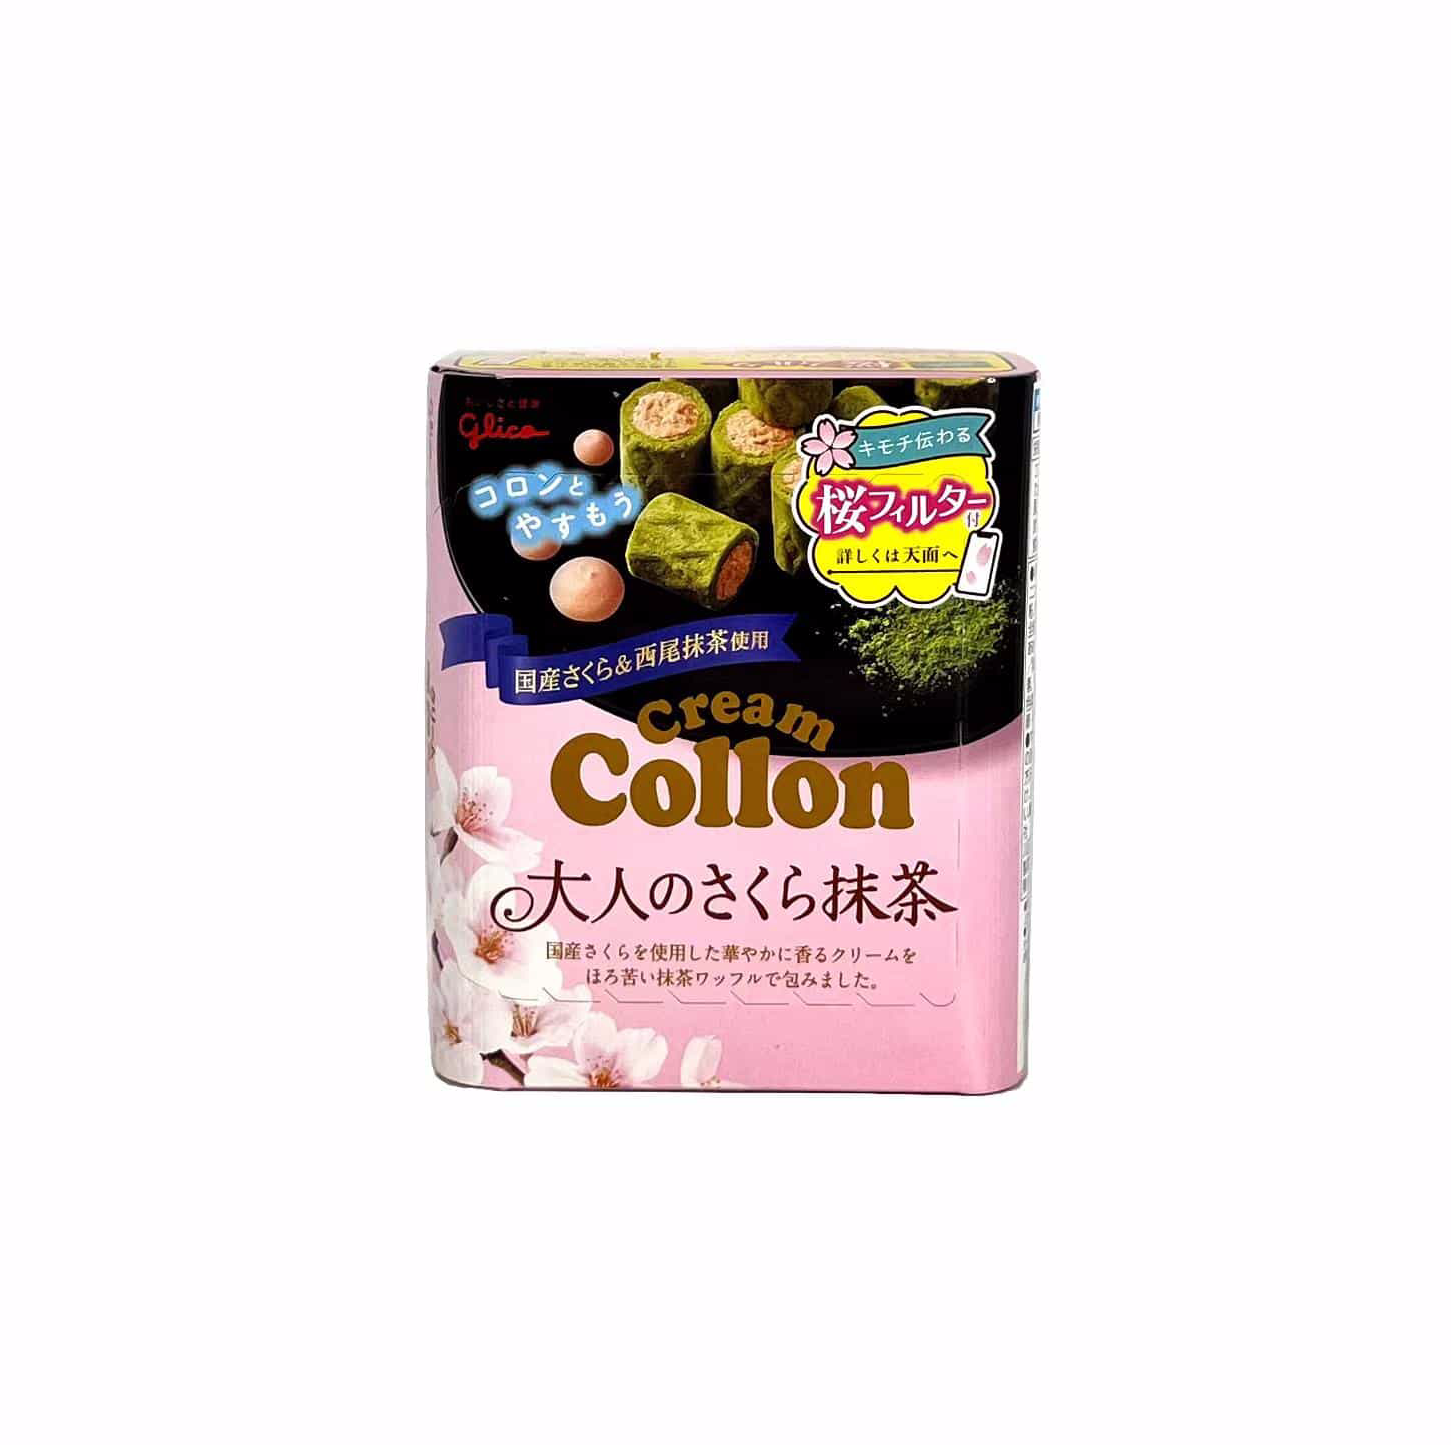 Bäst Före:2022.12.31 Cream Collon Biscuit Roll Sakura Matcha Smak 48g Glico Japan